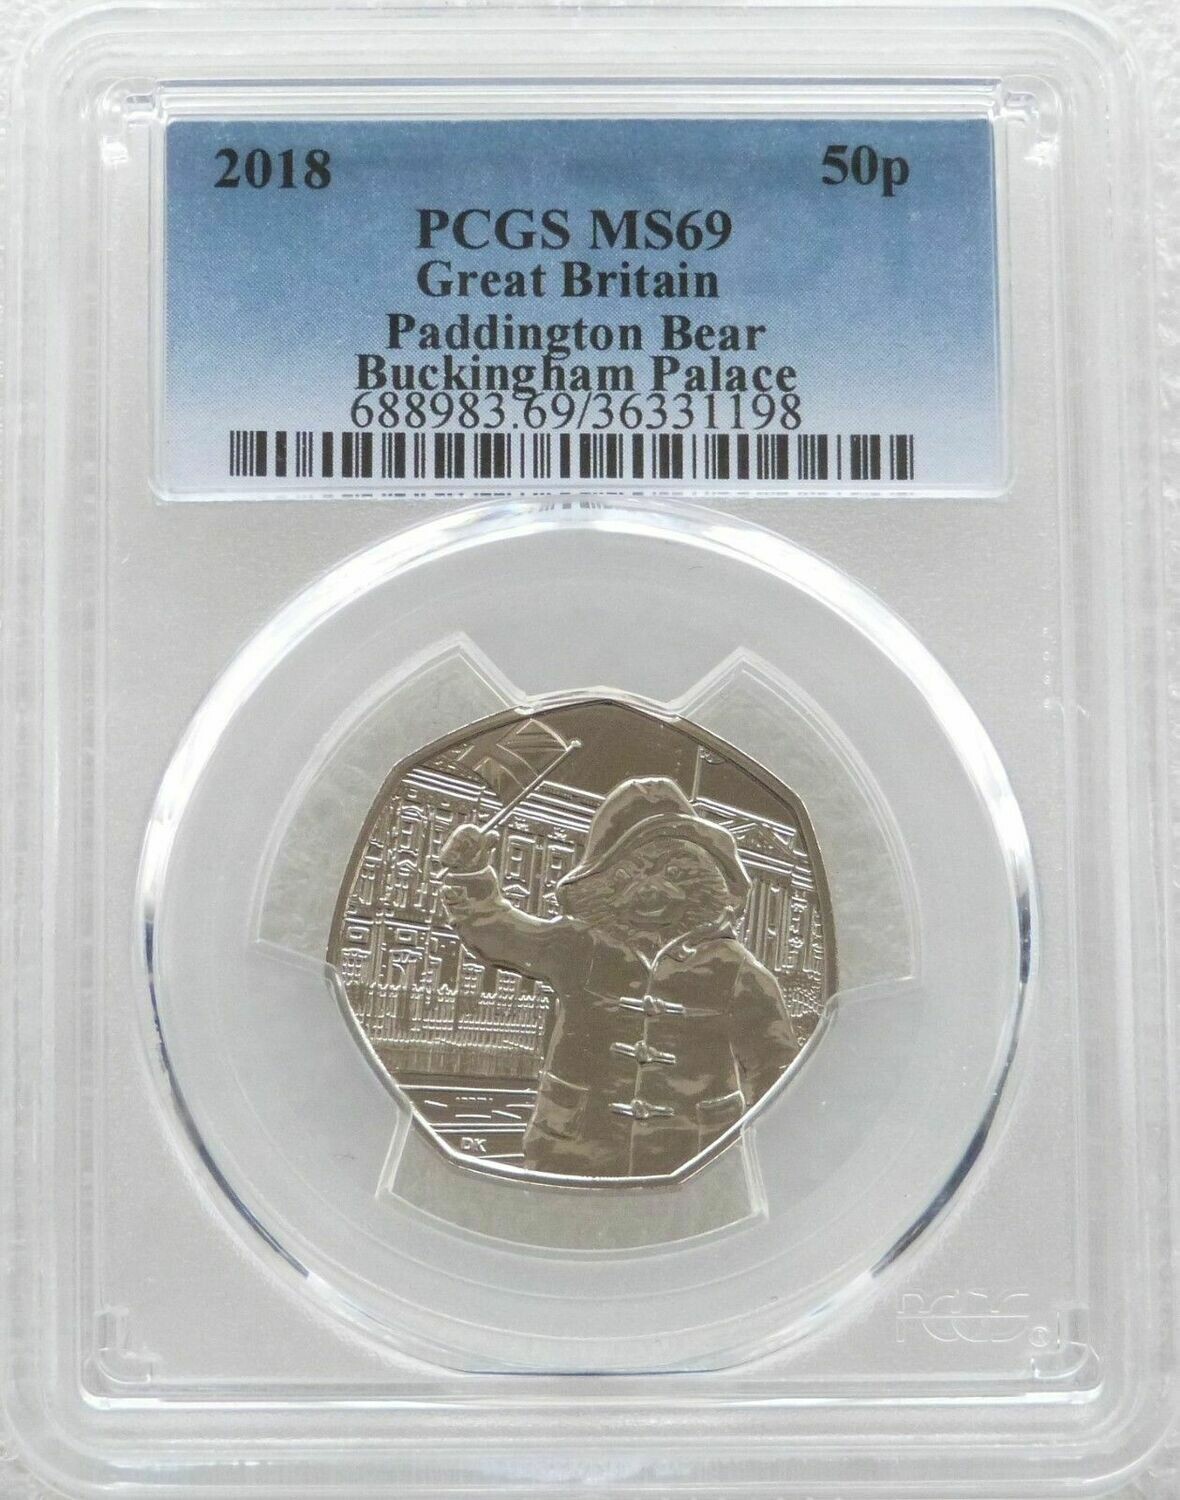 2018 Paddington at Buckingham Palace 50p Brilliant Uncirculated Coin PCGS MS69